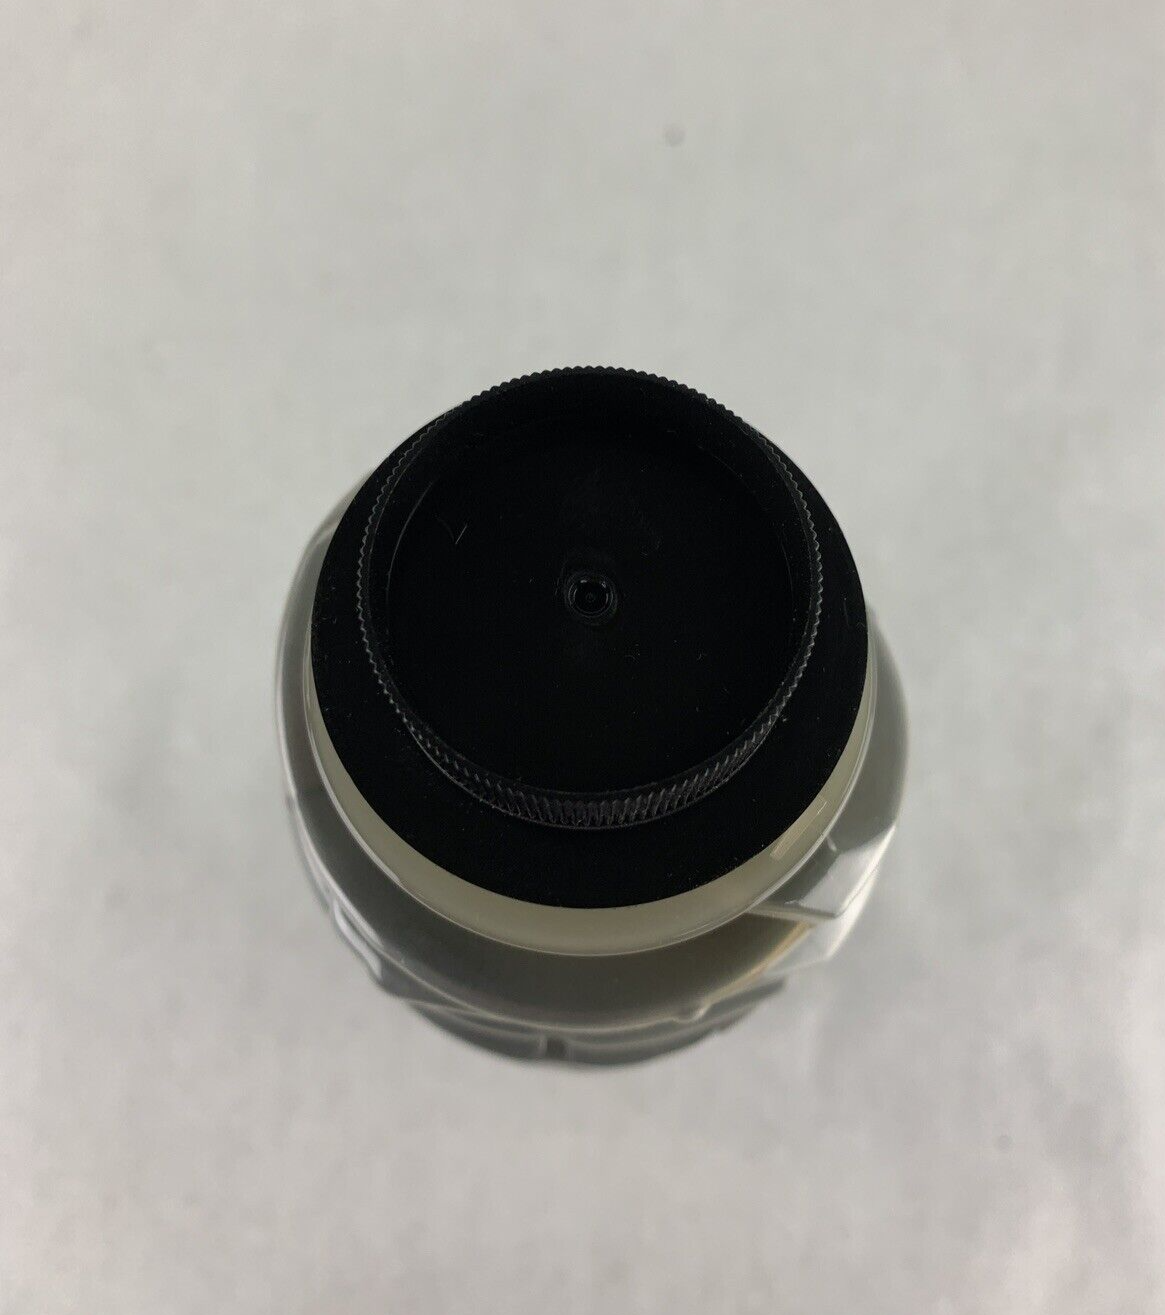 New OEM Sealed Ricoh 820076 SP8200A Black Toner Cartridge